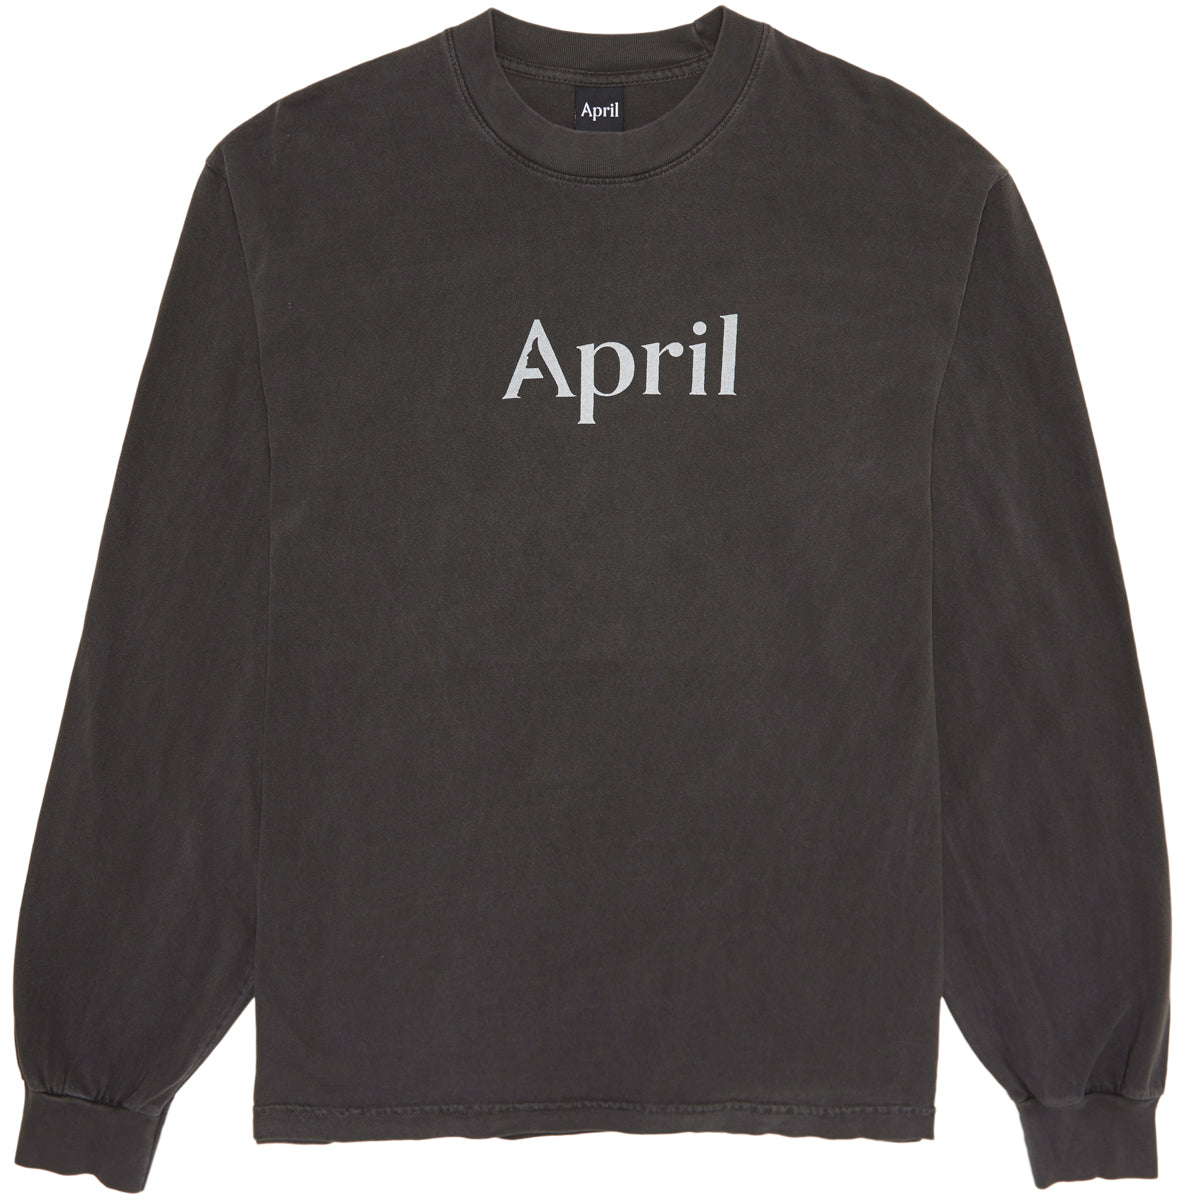 April Reflective Long Sleeve T-Shirt - Vintage Black image 1